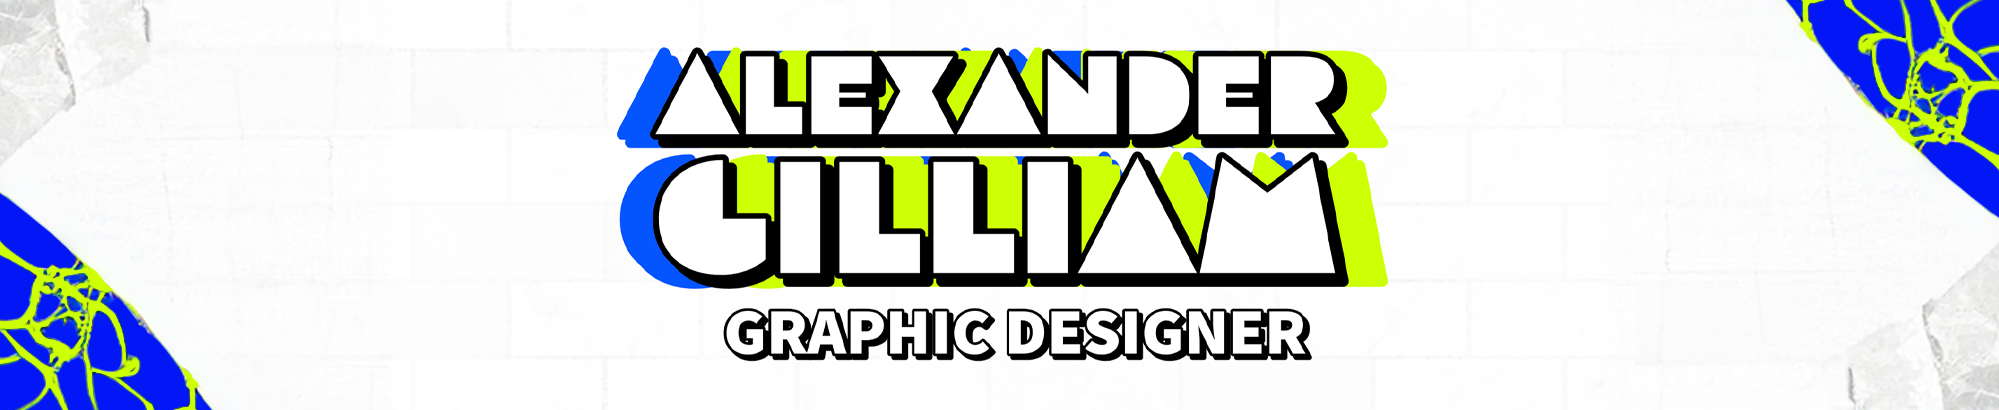 Alexander Gilliam's profile banner